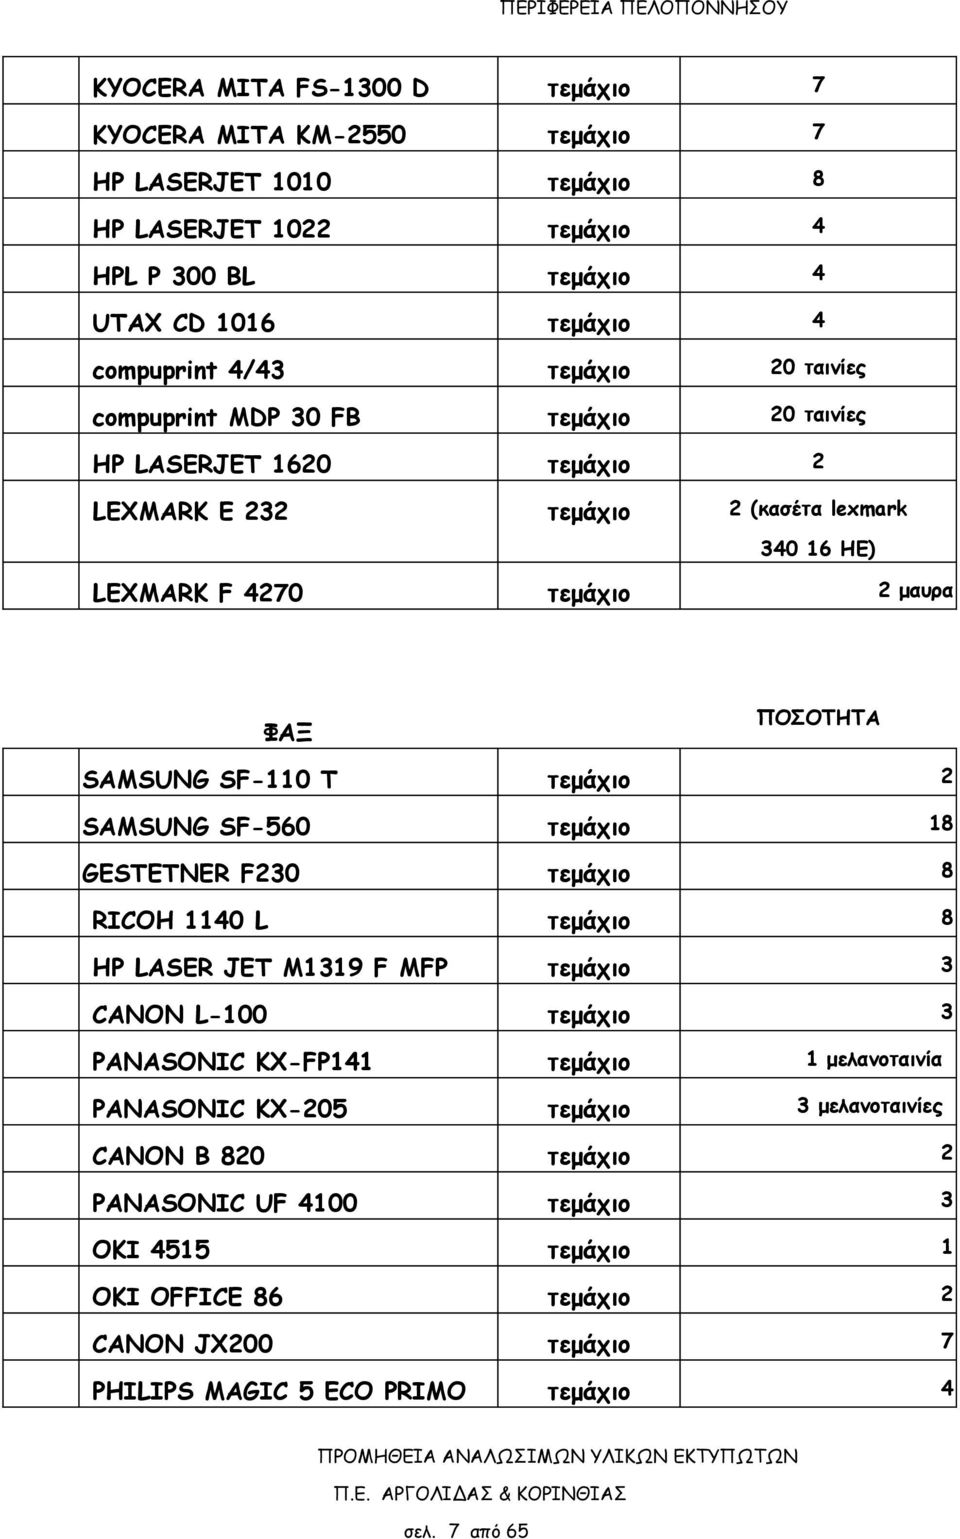 SAMSUNG SF-110 T 2 SAMSUNG SF-560 18 GESTETNER F230 8 RICOH 1140 L 8 HP LASER JET M1319 F MFP 3 CANON L-100 3 PANASONIC KX-FP141 1